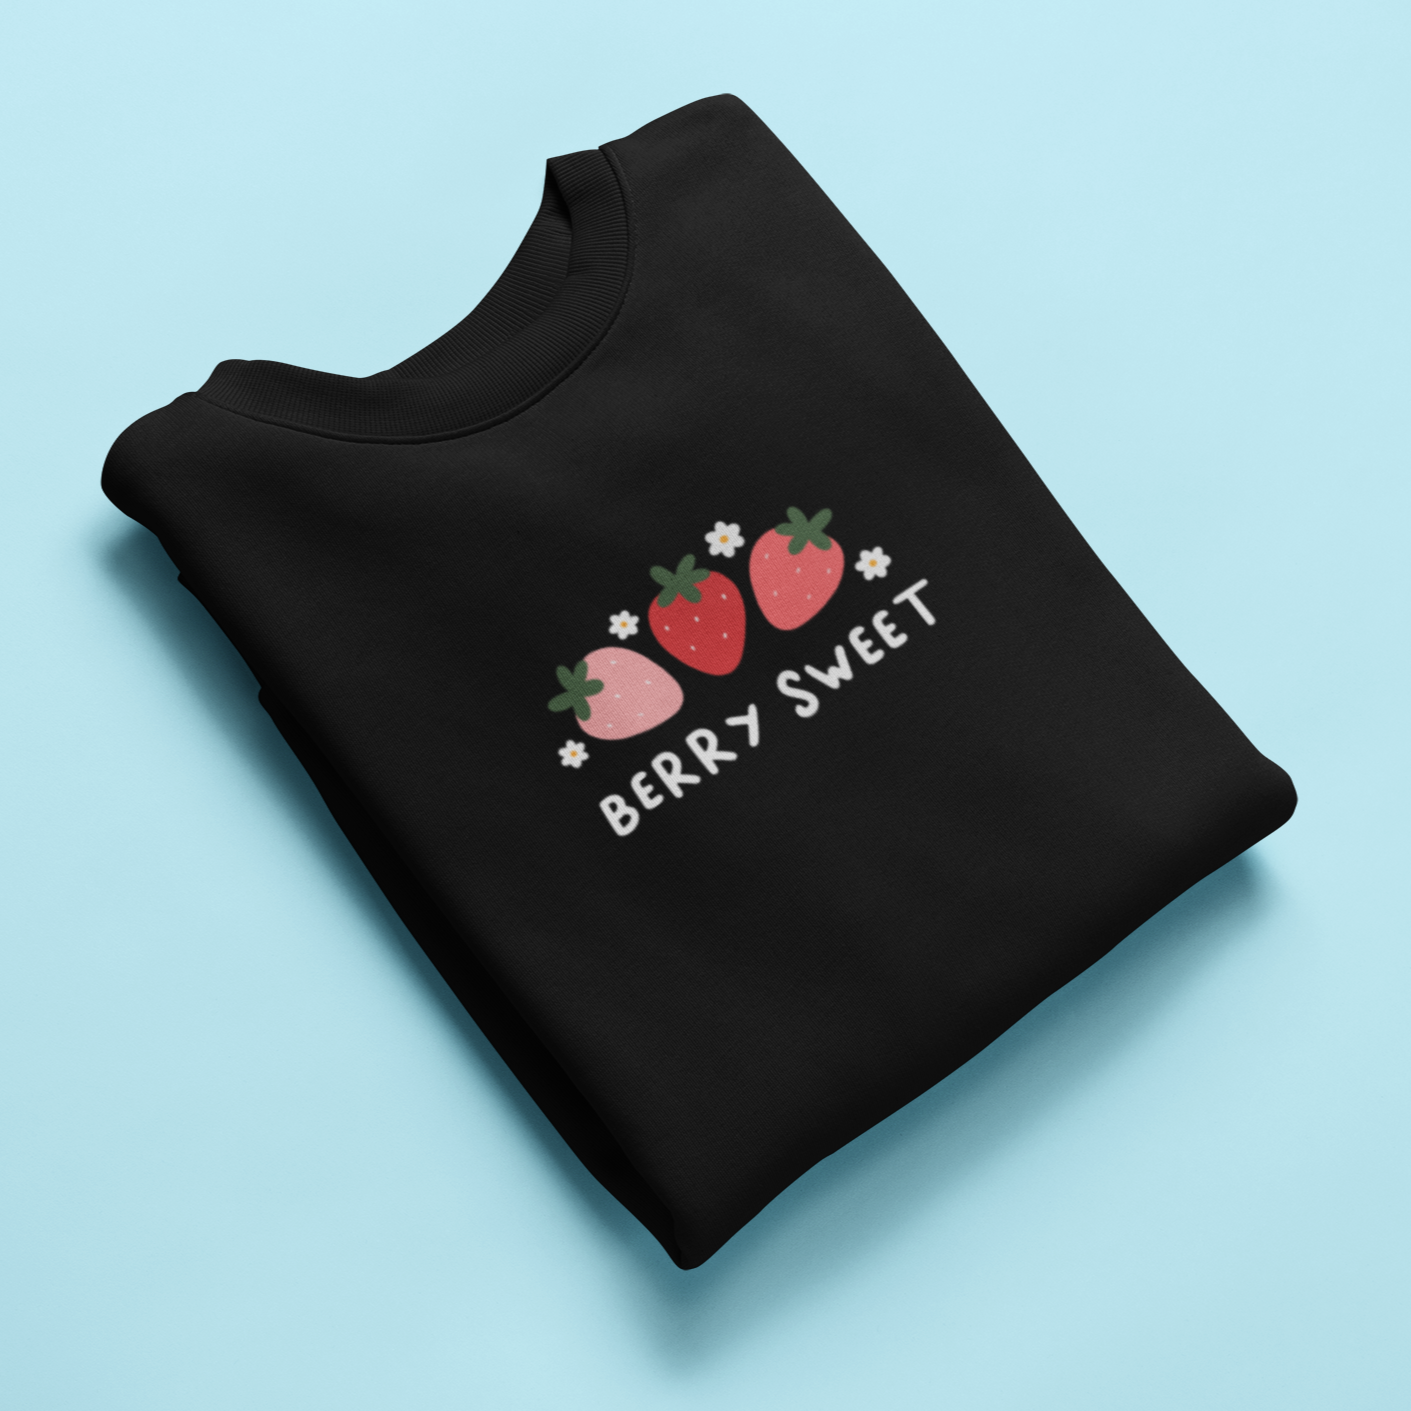 strawberry jumper - crewneck strawberry print jumper